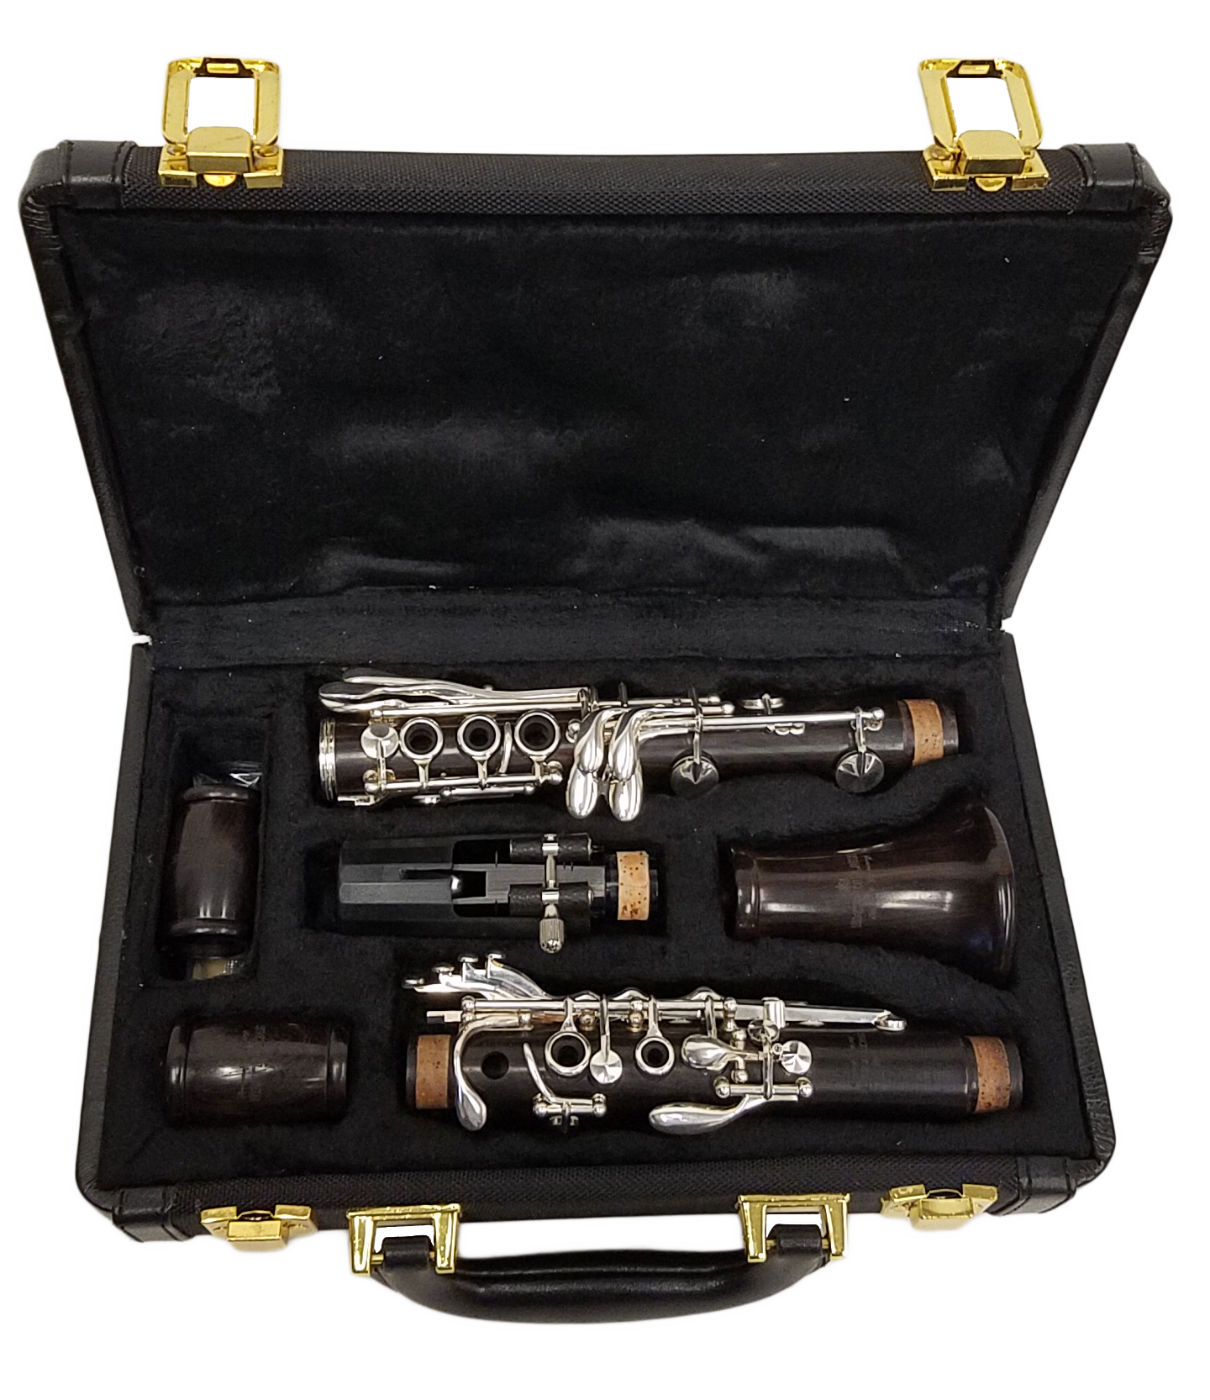 German Elite Conservatory Clarinet Key of C